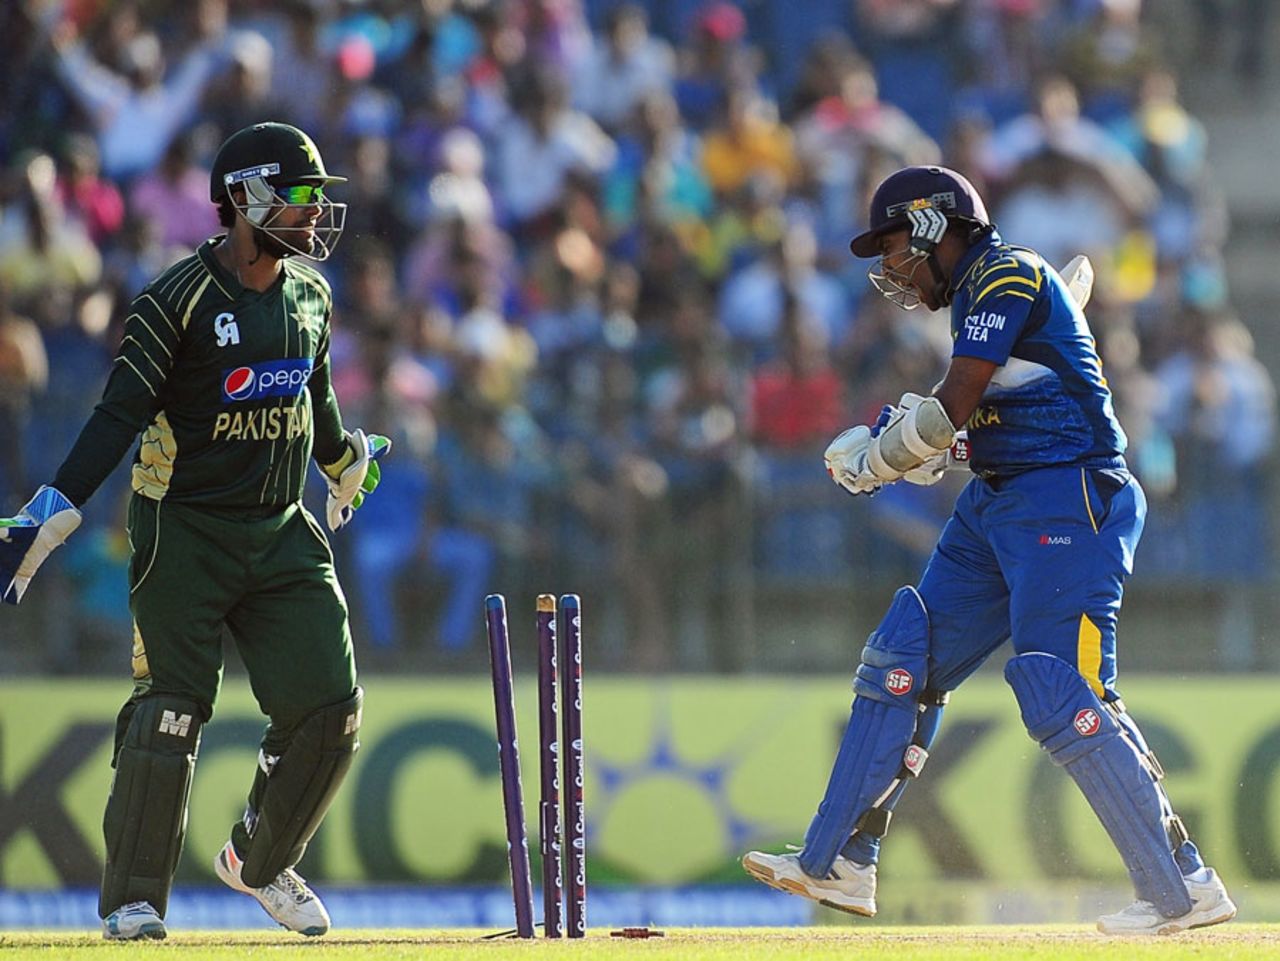 Mahela Jayawardene was bowled for 67, Sri Lanka v Pakistan, 2nd ODI, Hambantota, August 26, 2014